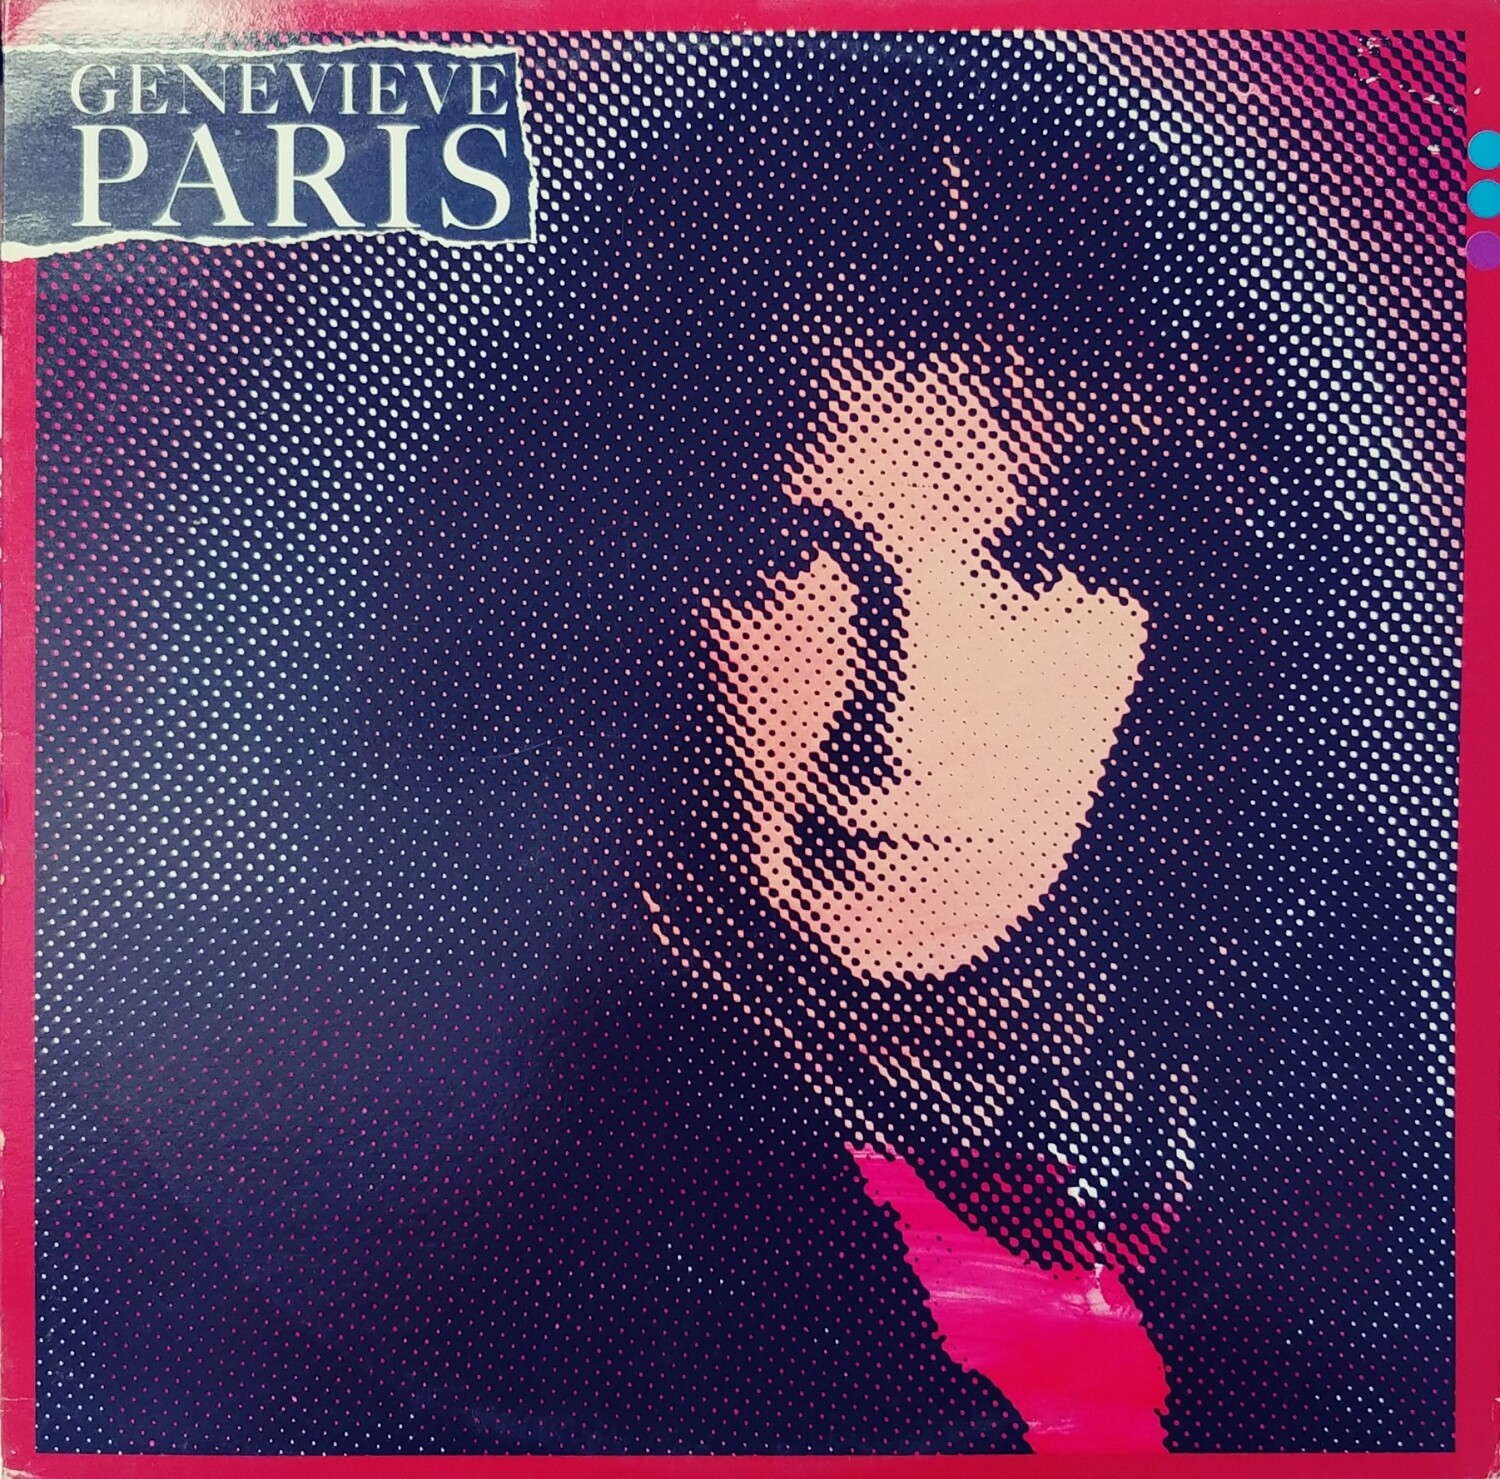 Geneviève Paris - Geneviève Paris (1982)